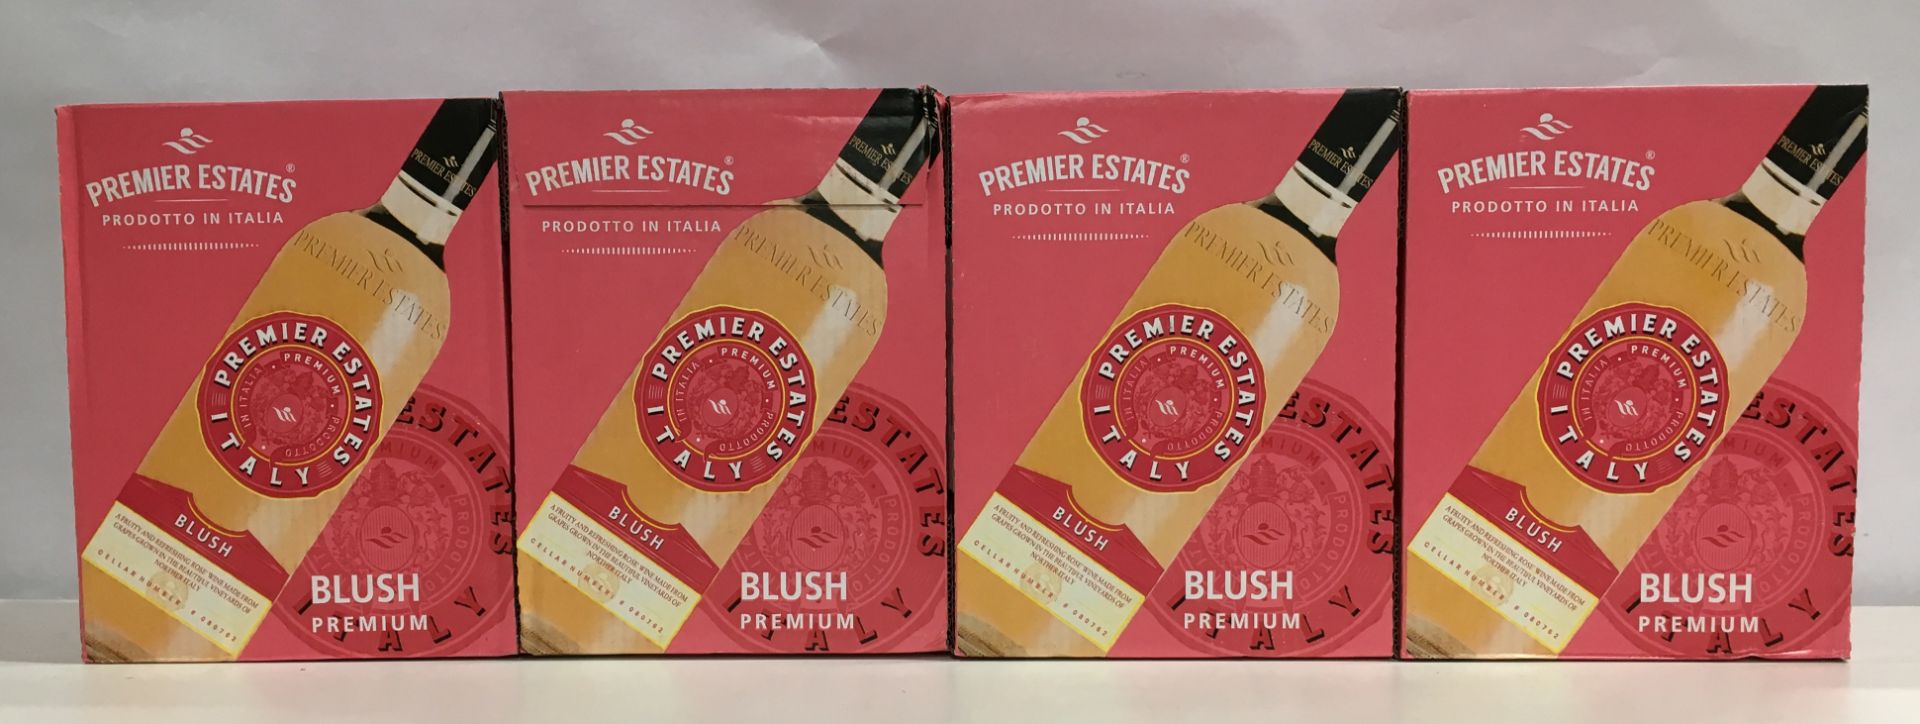 24 x 75cl Bottles Premier Estates Blush Premium Wine - Image 2 of 6